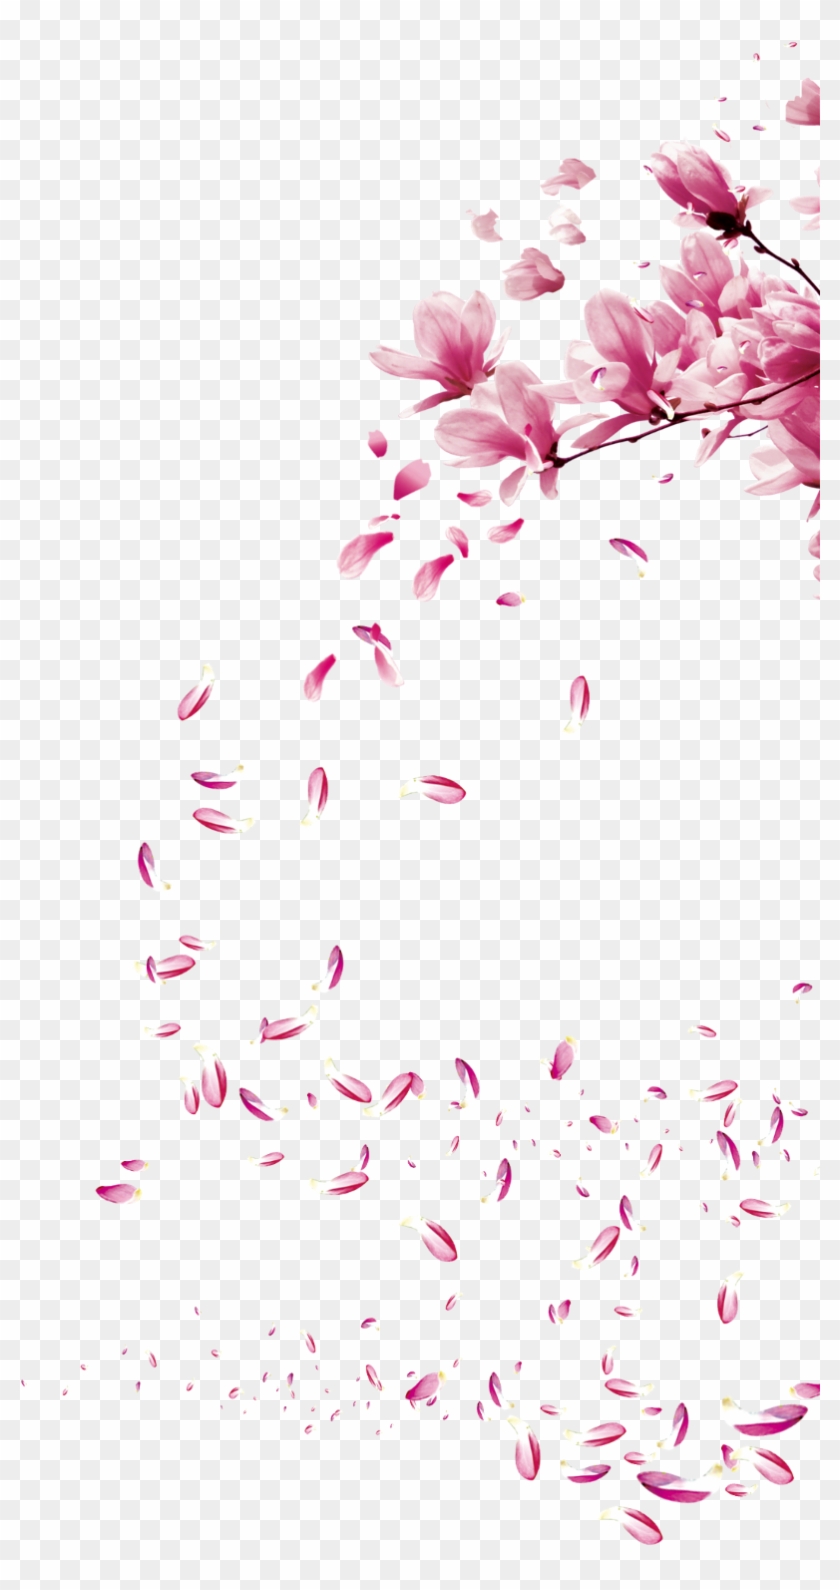 Flowers Flores Sakura Petalas Petala Sticker Cherry Blossom Brush Hd Png Download 1024x1536 Pngfind